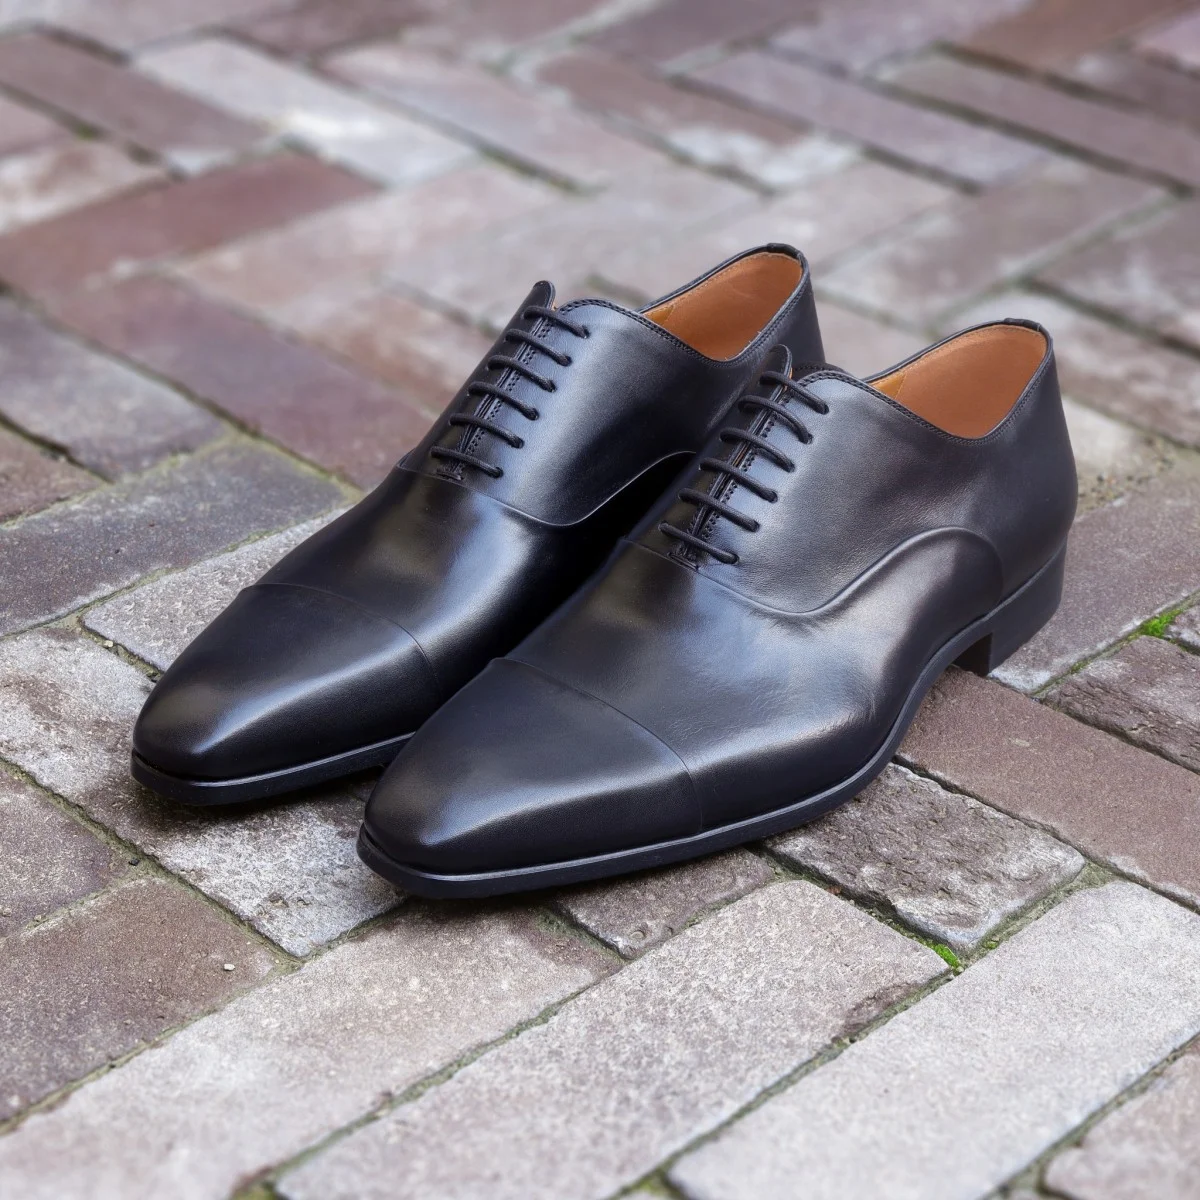 Magnanni Milos / Corey black toe cap oxford shoes